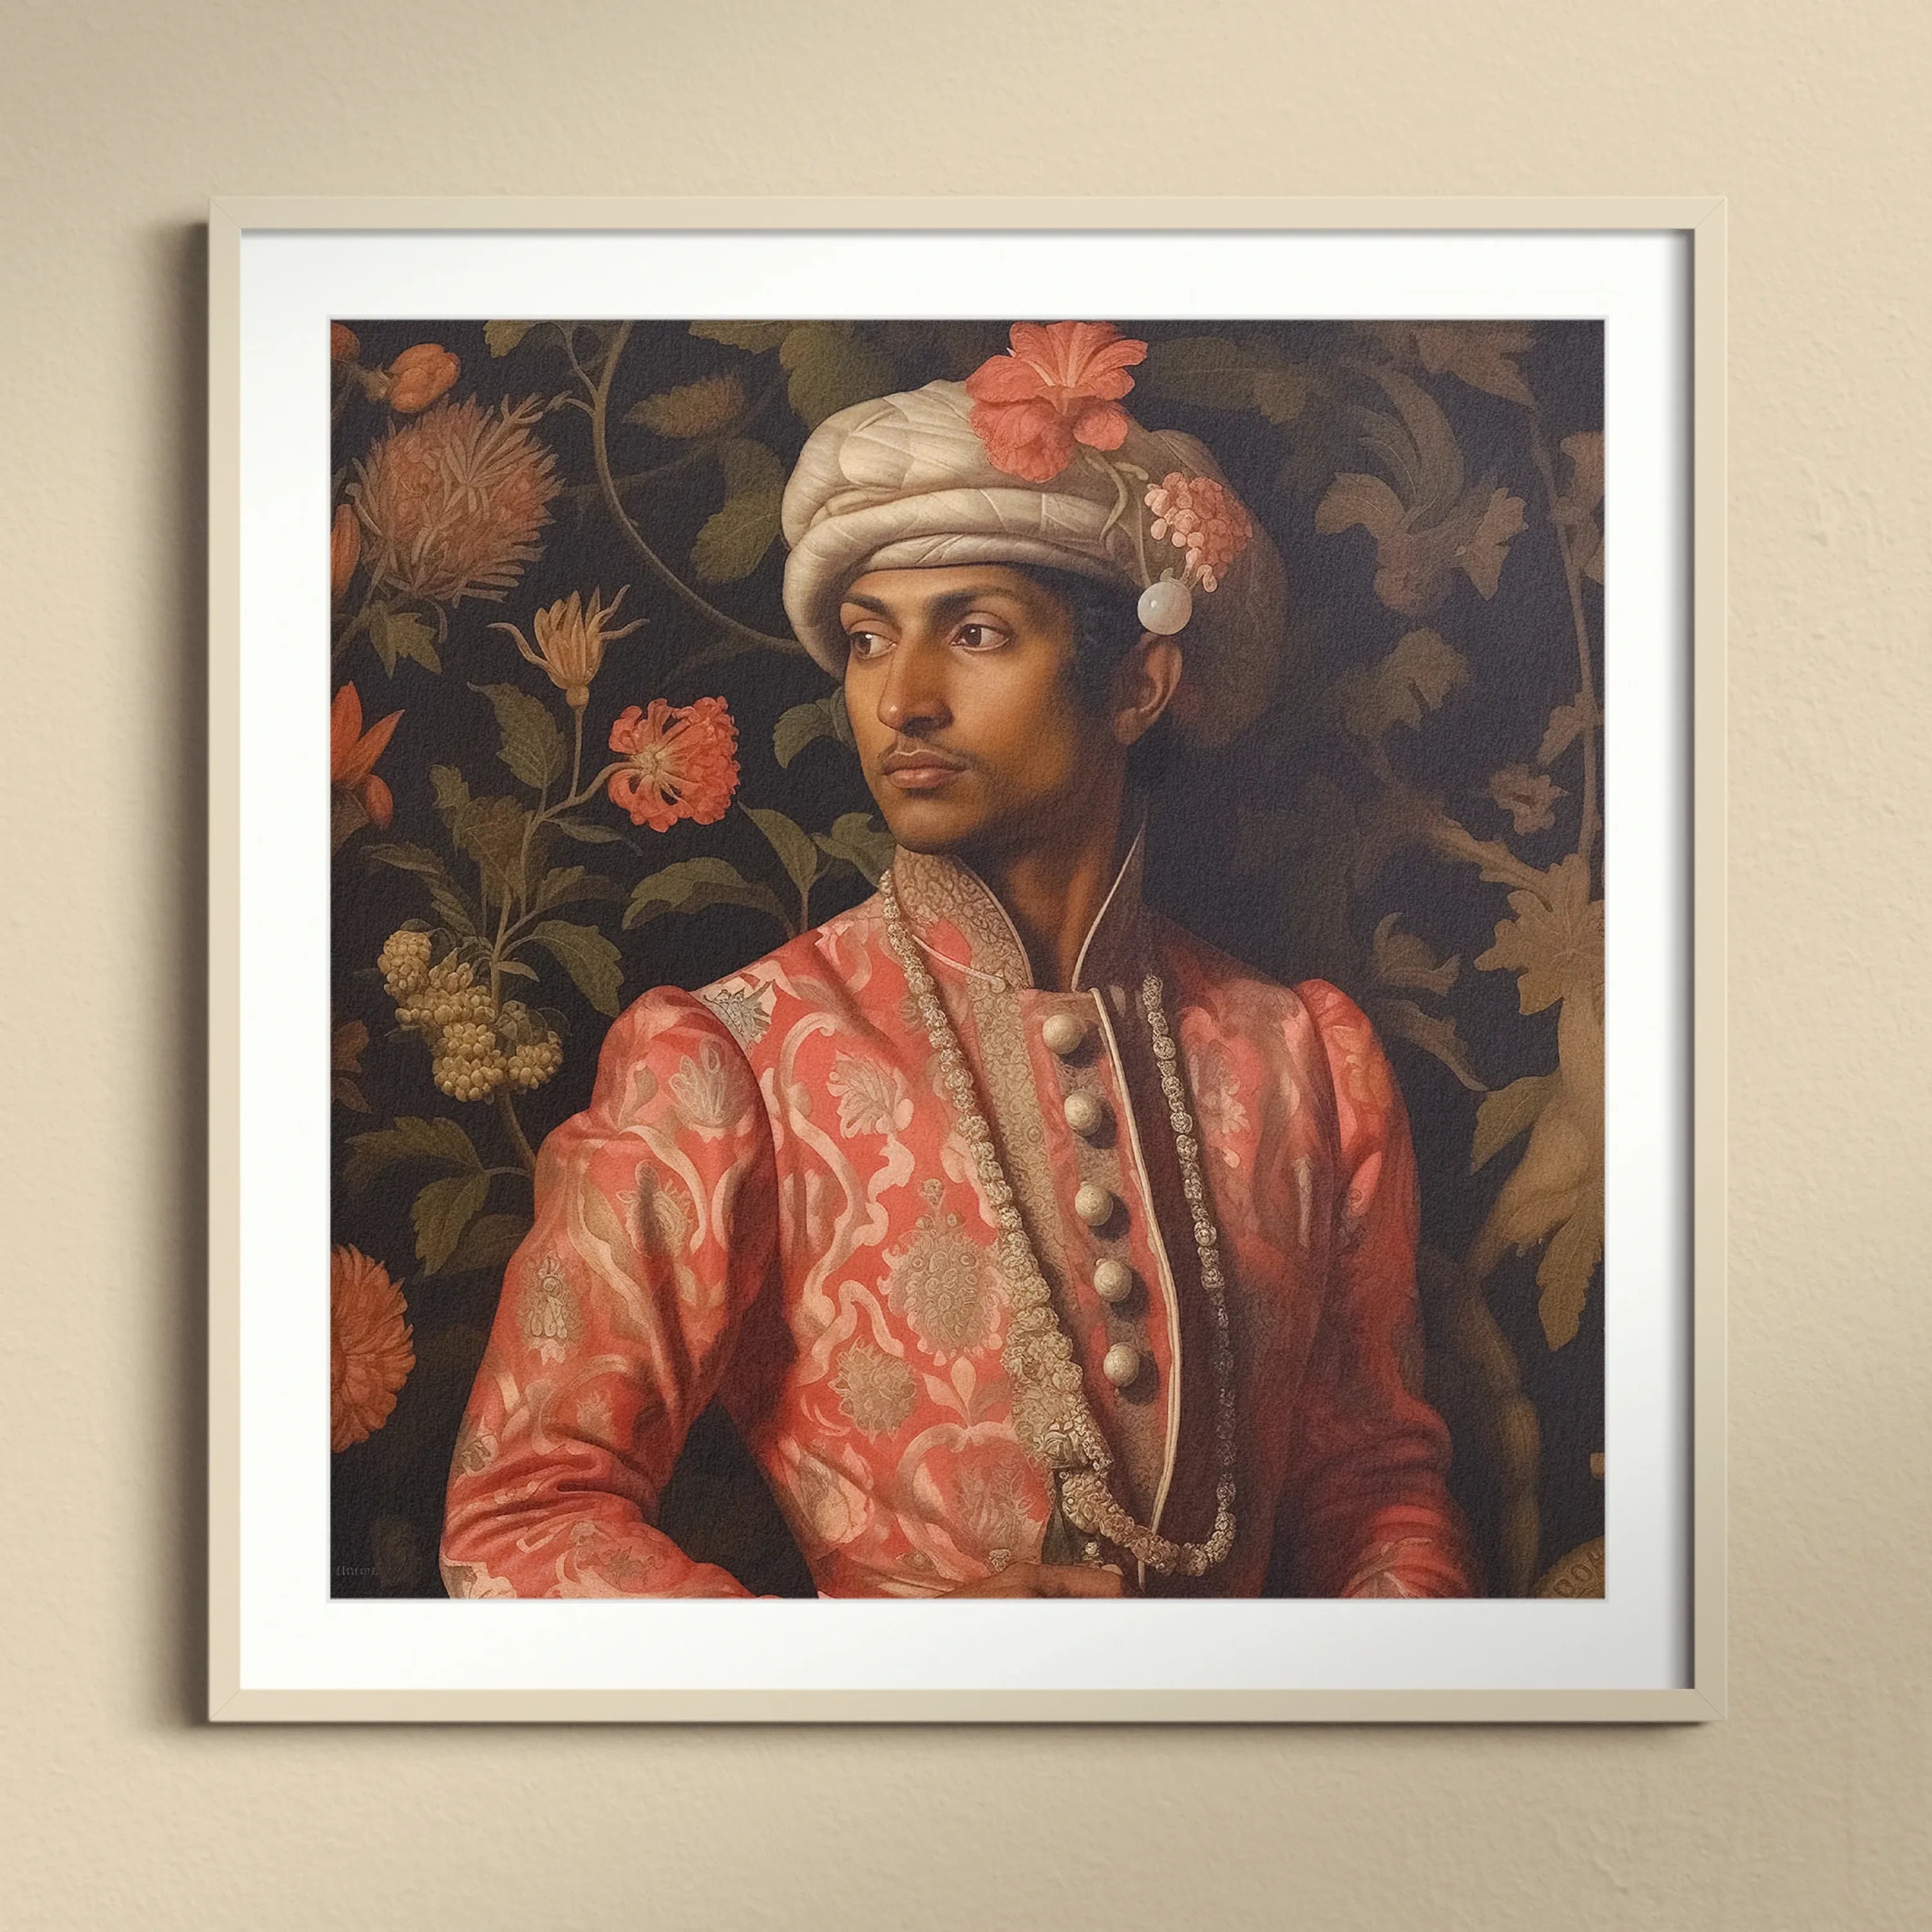 Prince Kaniyan - Gay India Tamil Royalty Queerart Print - 16’x16’ - Posters Prints & Visual Artwork - Aesthetic Art